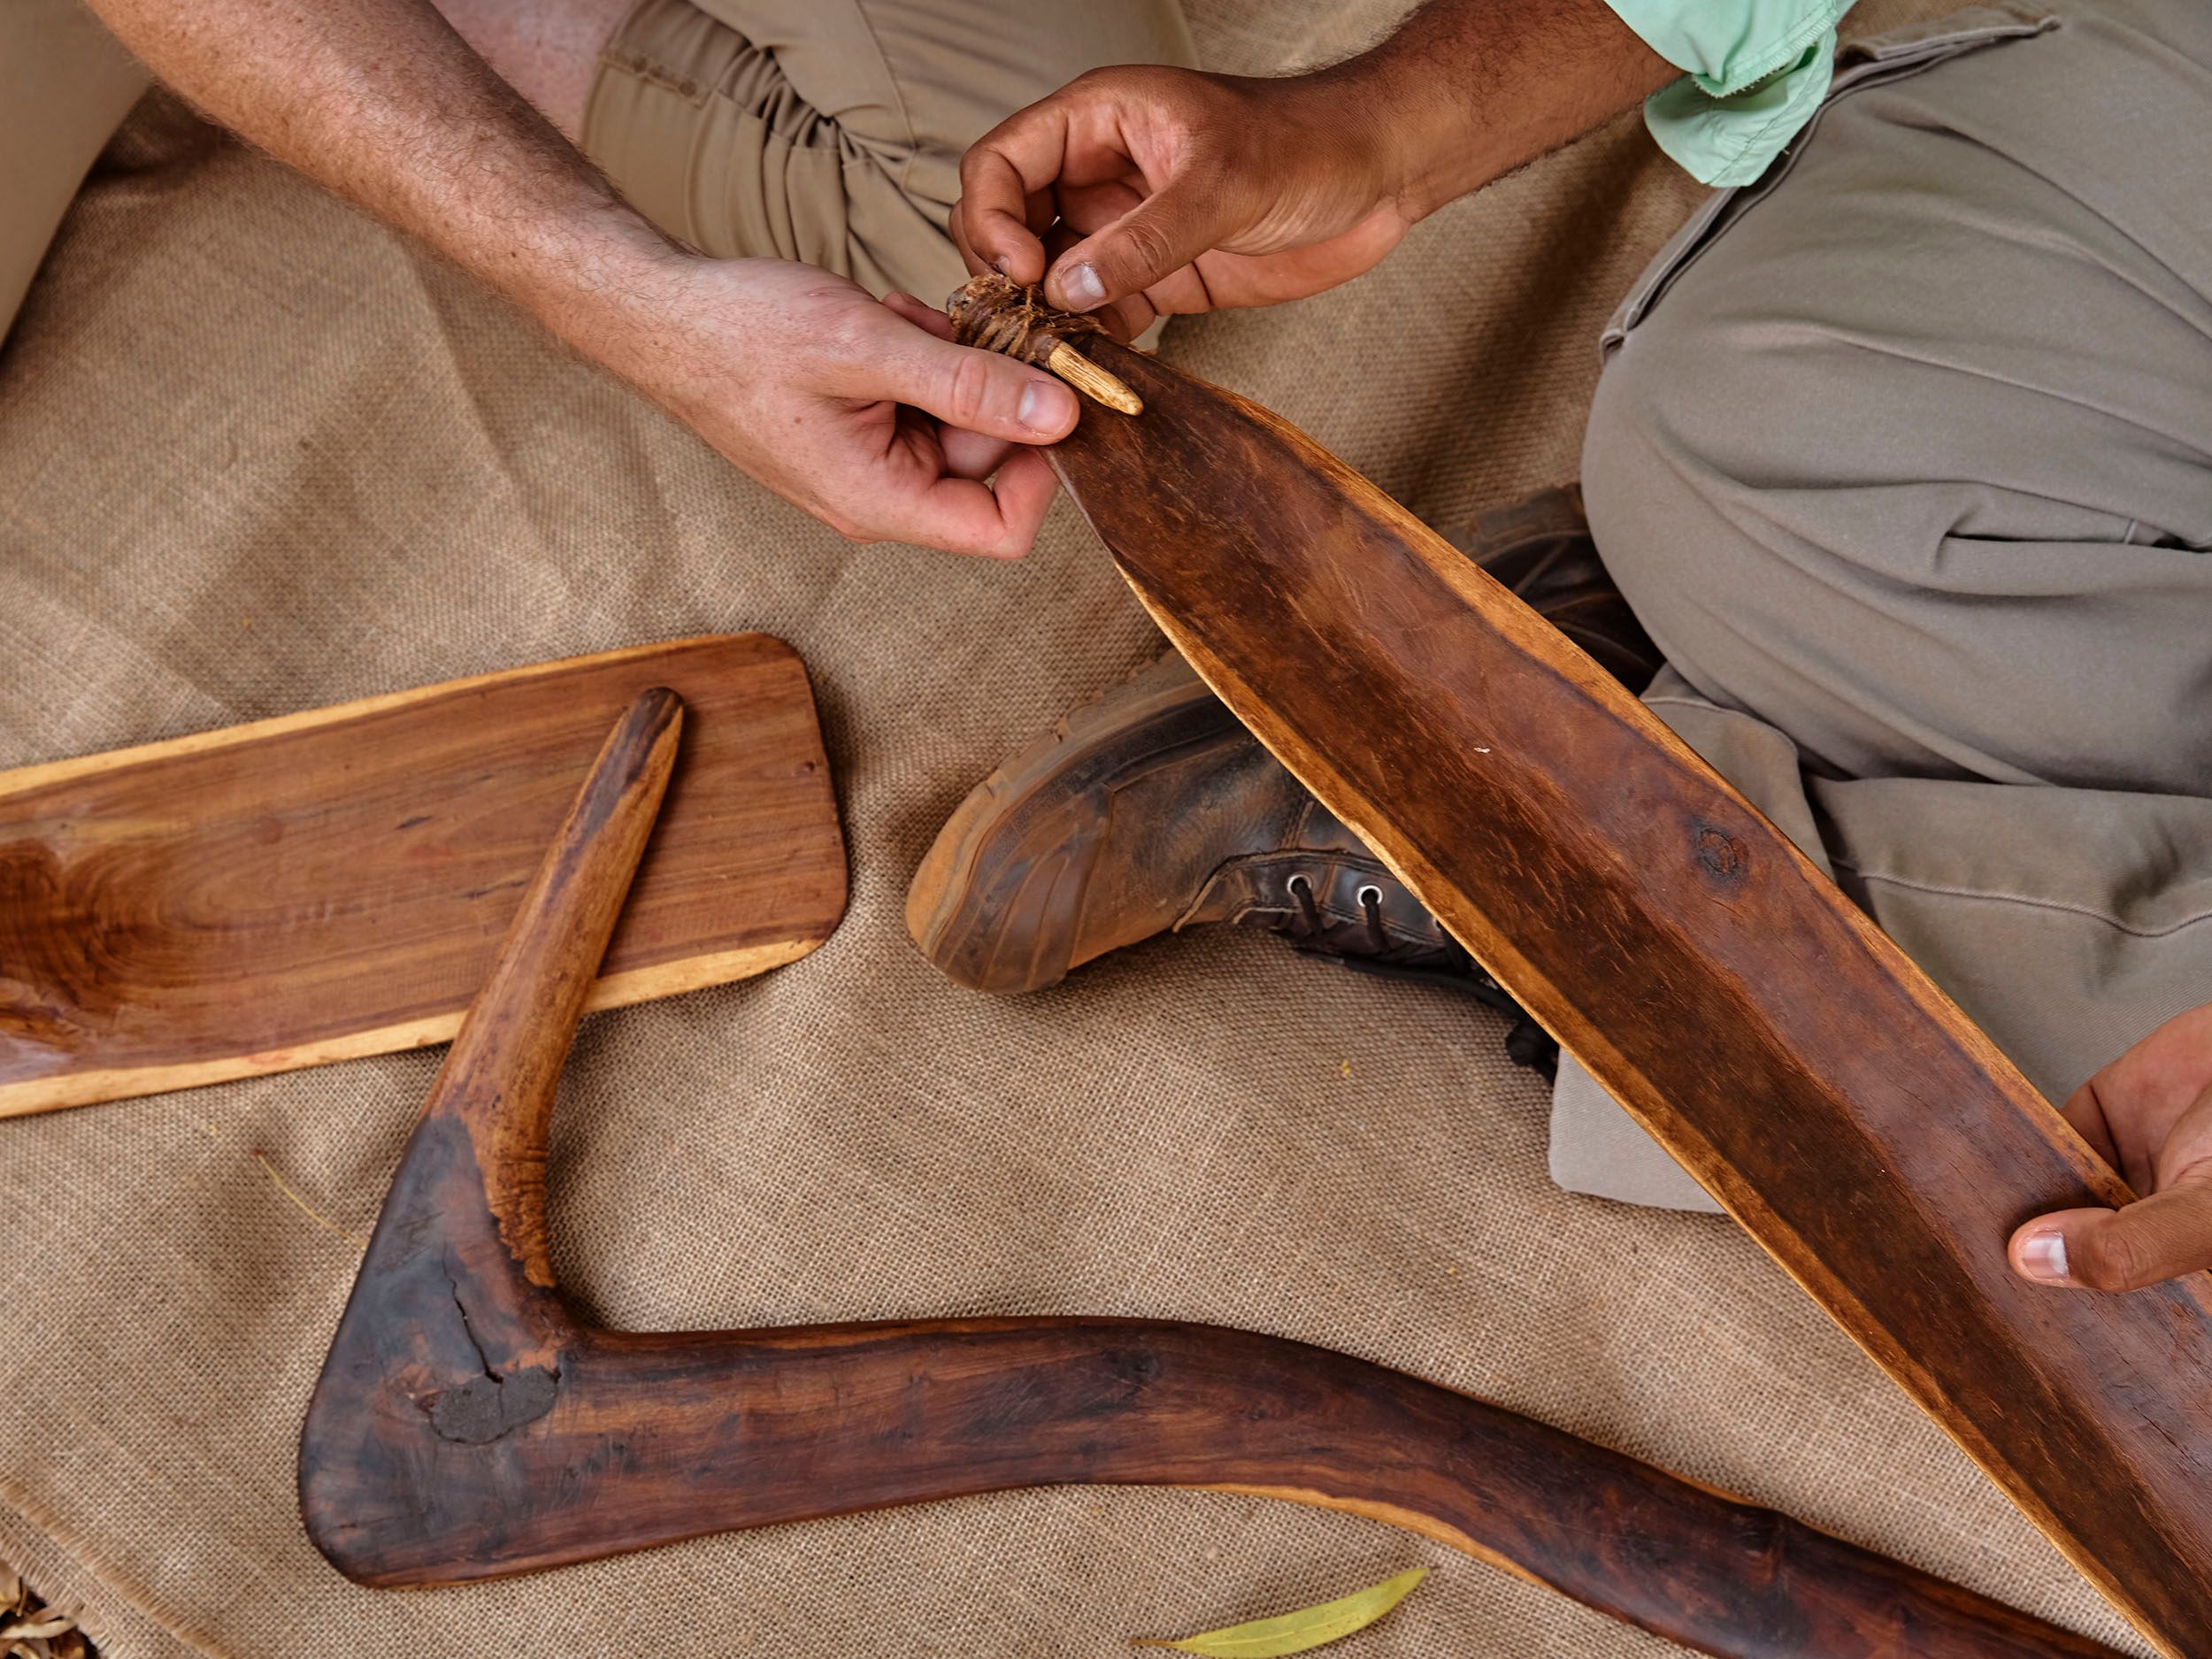 Aboriginal traditional tools